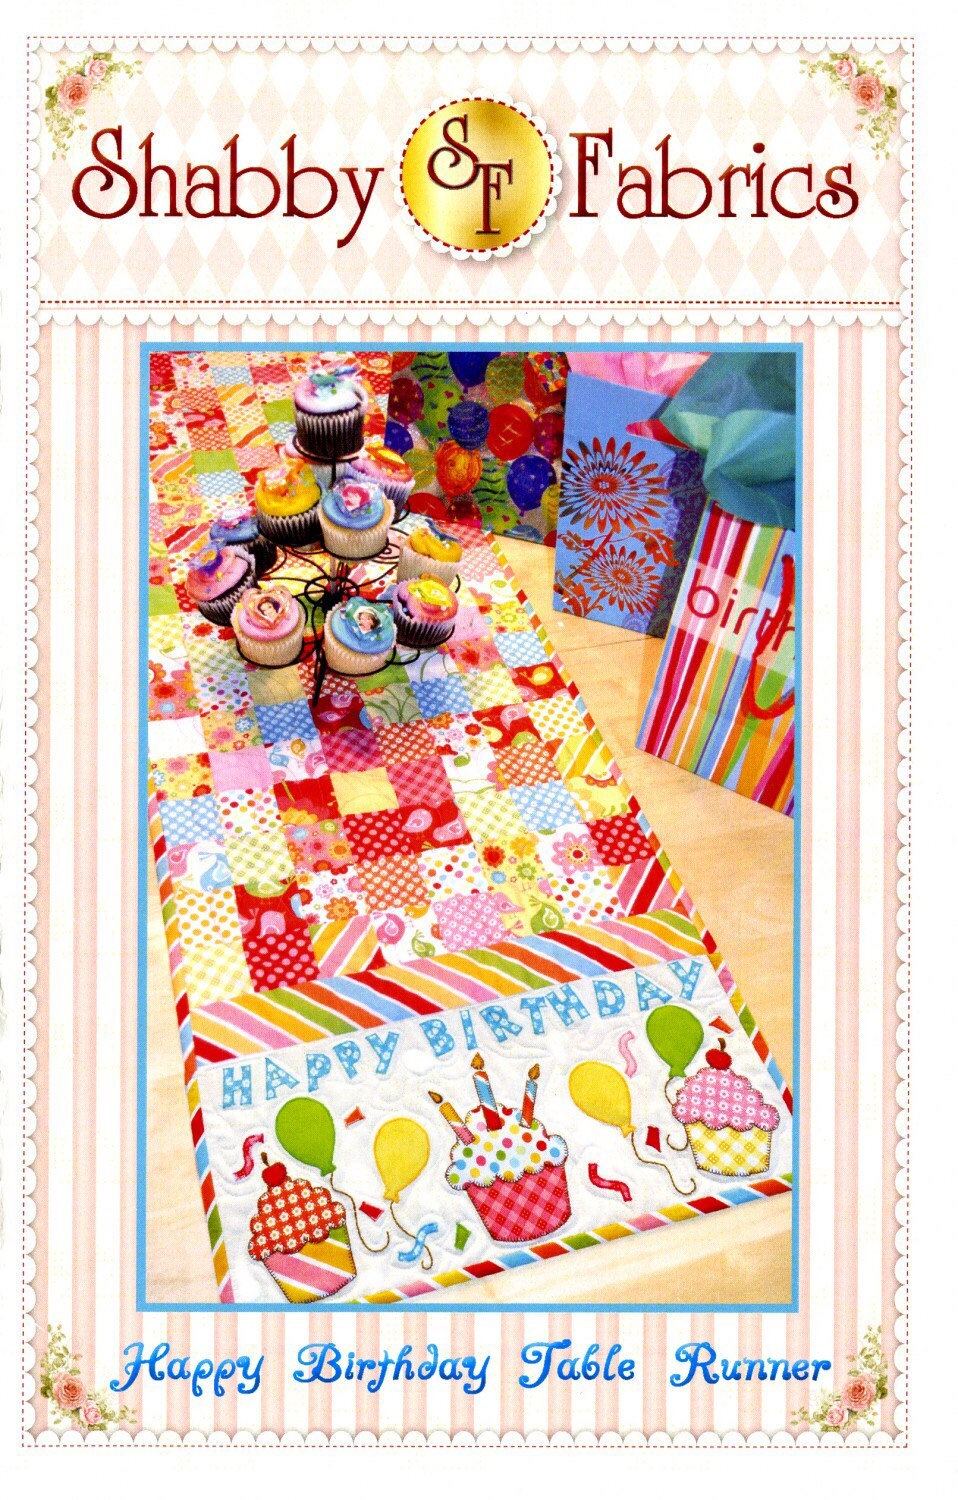 Happy Birthday Table Runner Pattern - Shabby Fabrics - Jennifer Bosworth